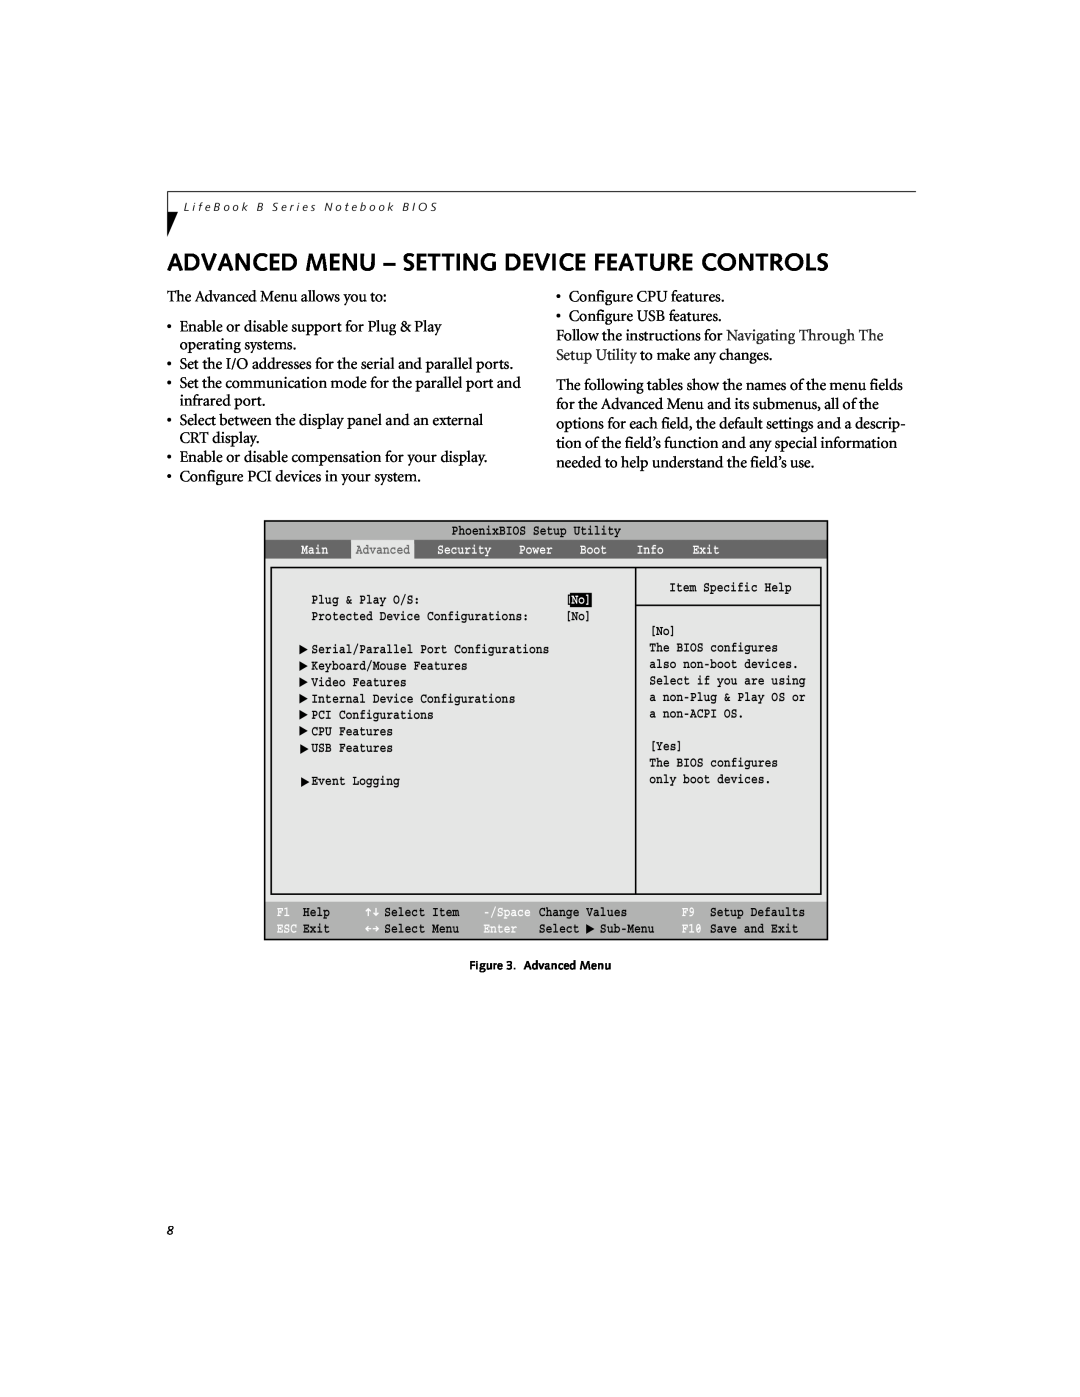 Fujitsu B2610 manual Advanced Menu - Setting Device Feature Controls 